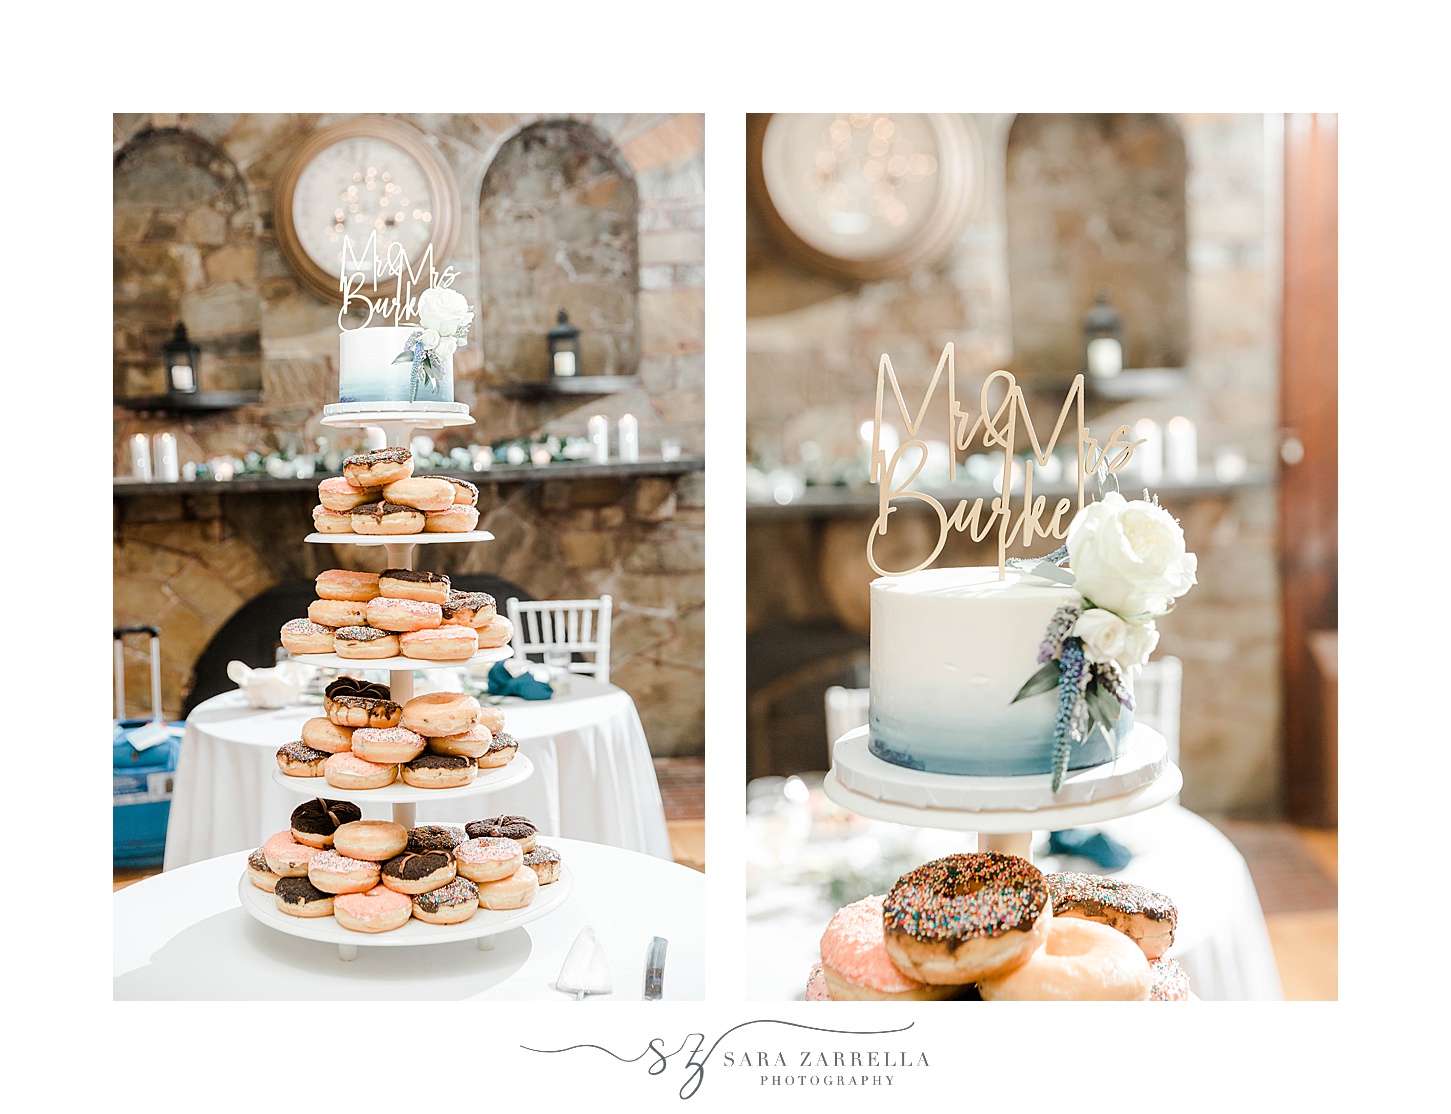 dessert displays for RI wedding reception